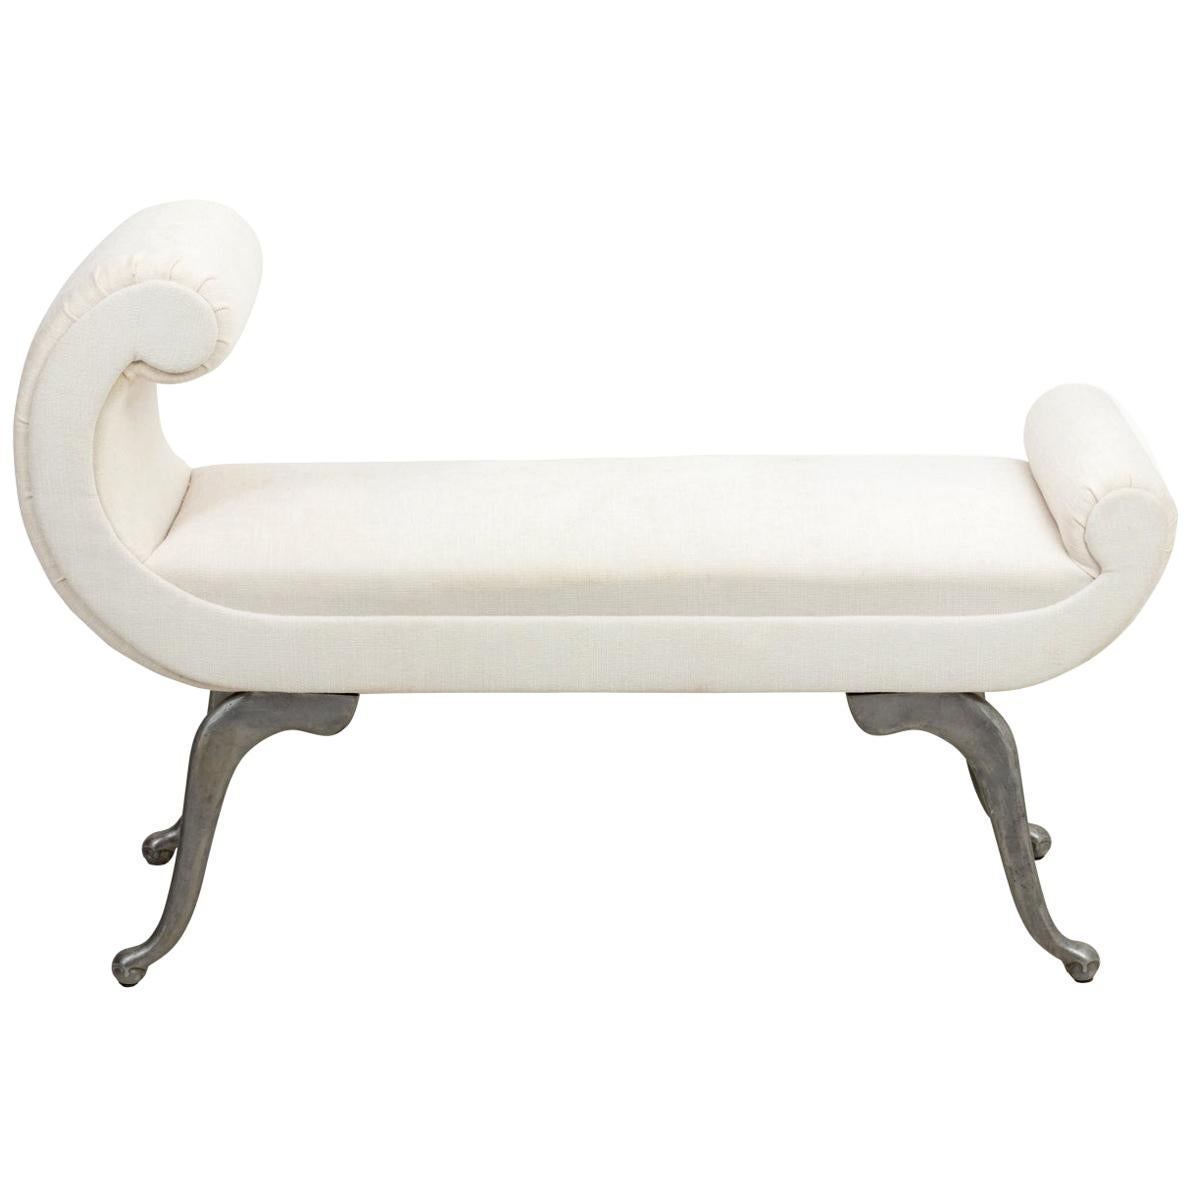 Modern Upholstered Bench For Sale